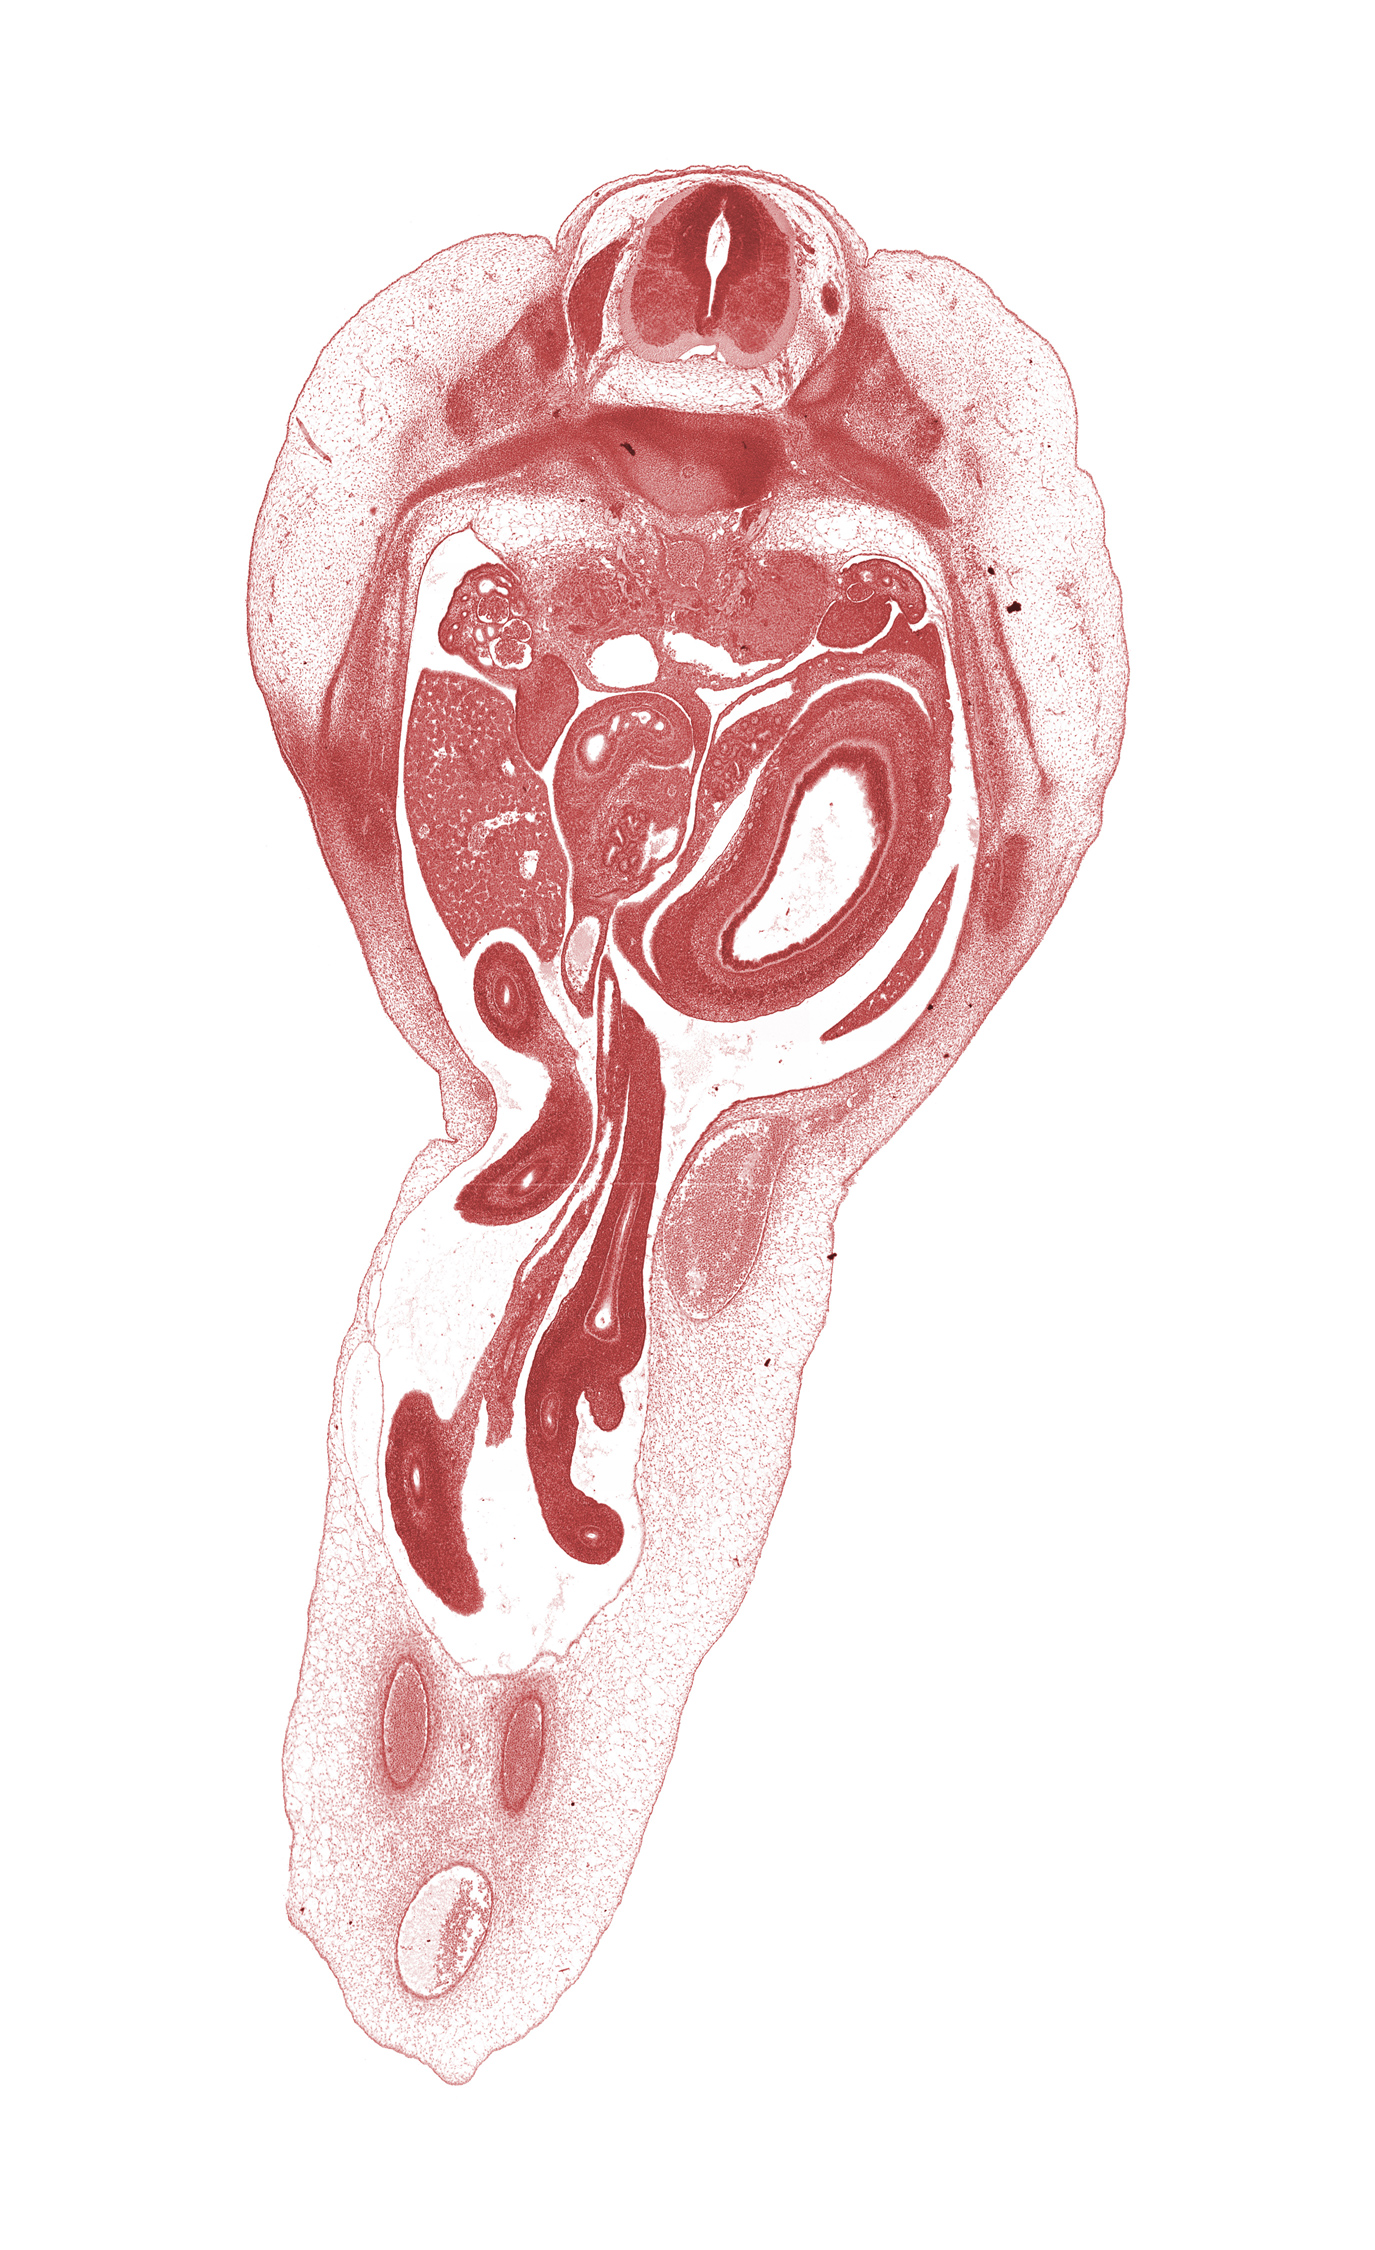 allantois, caudal edge of left lobe of liver, cephalic edge of T-12 spinal ganglion, distal limb of herniated midgut, duodenum (second part), left umbilical artery, lesser sac (omental bursa), mesonephros, midgut mesentery, osteogenic layer, proximal limb of herniated midgut, proximal limb of herniated midgut (jejunum), rib 12, right umbilical artery, spleen, splenic vein, superior mesenteric artery, superior mesenteric vein, umbilical vein, ventral pancreas